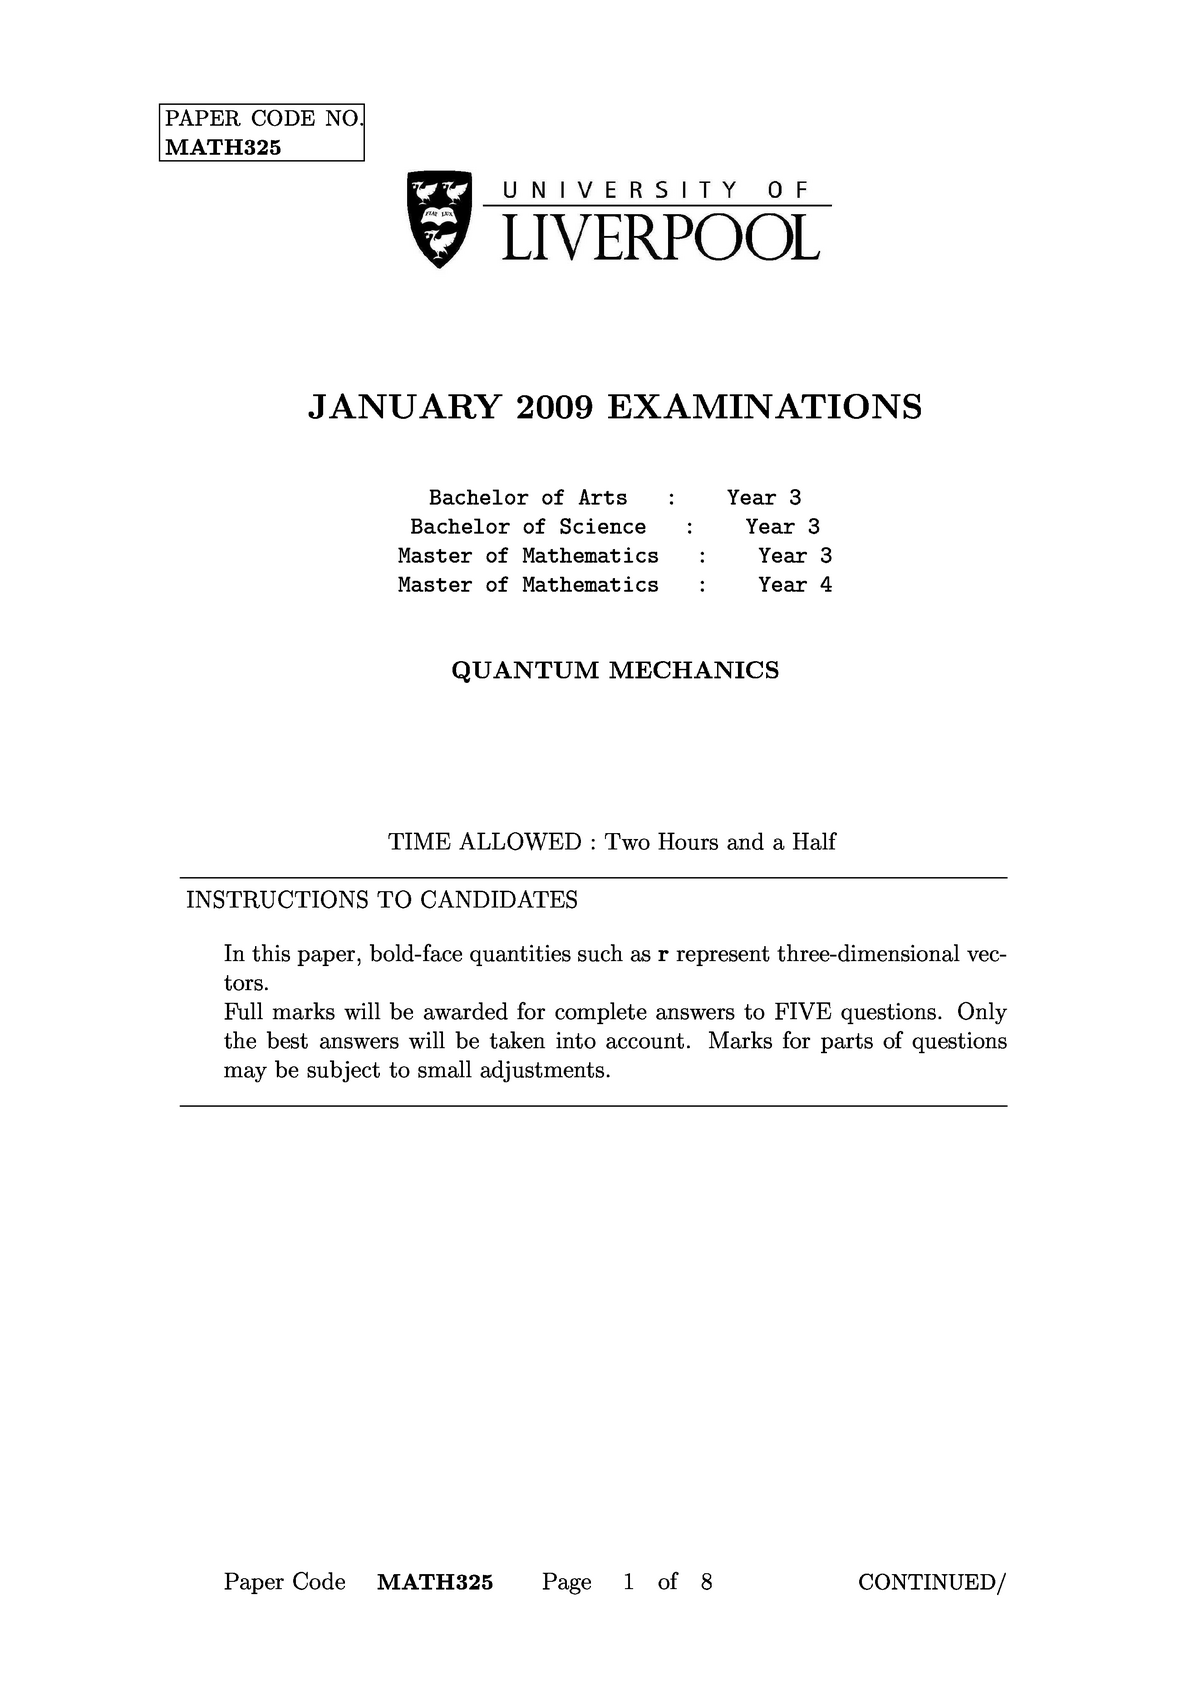 Exam January 09 Questions Math325 Liverpool Studocu